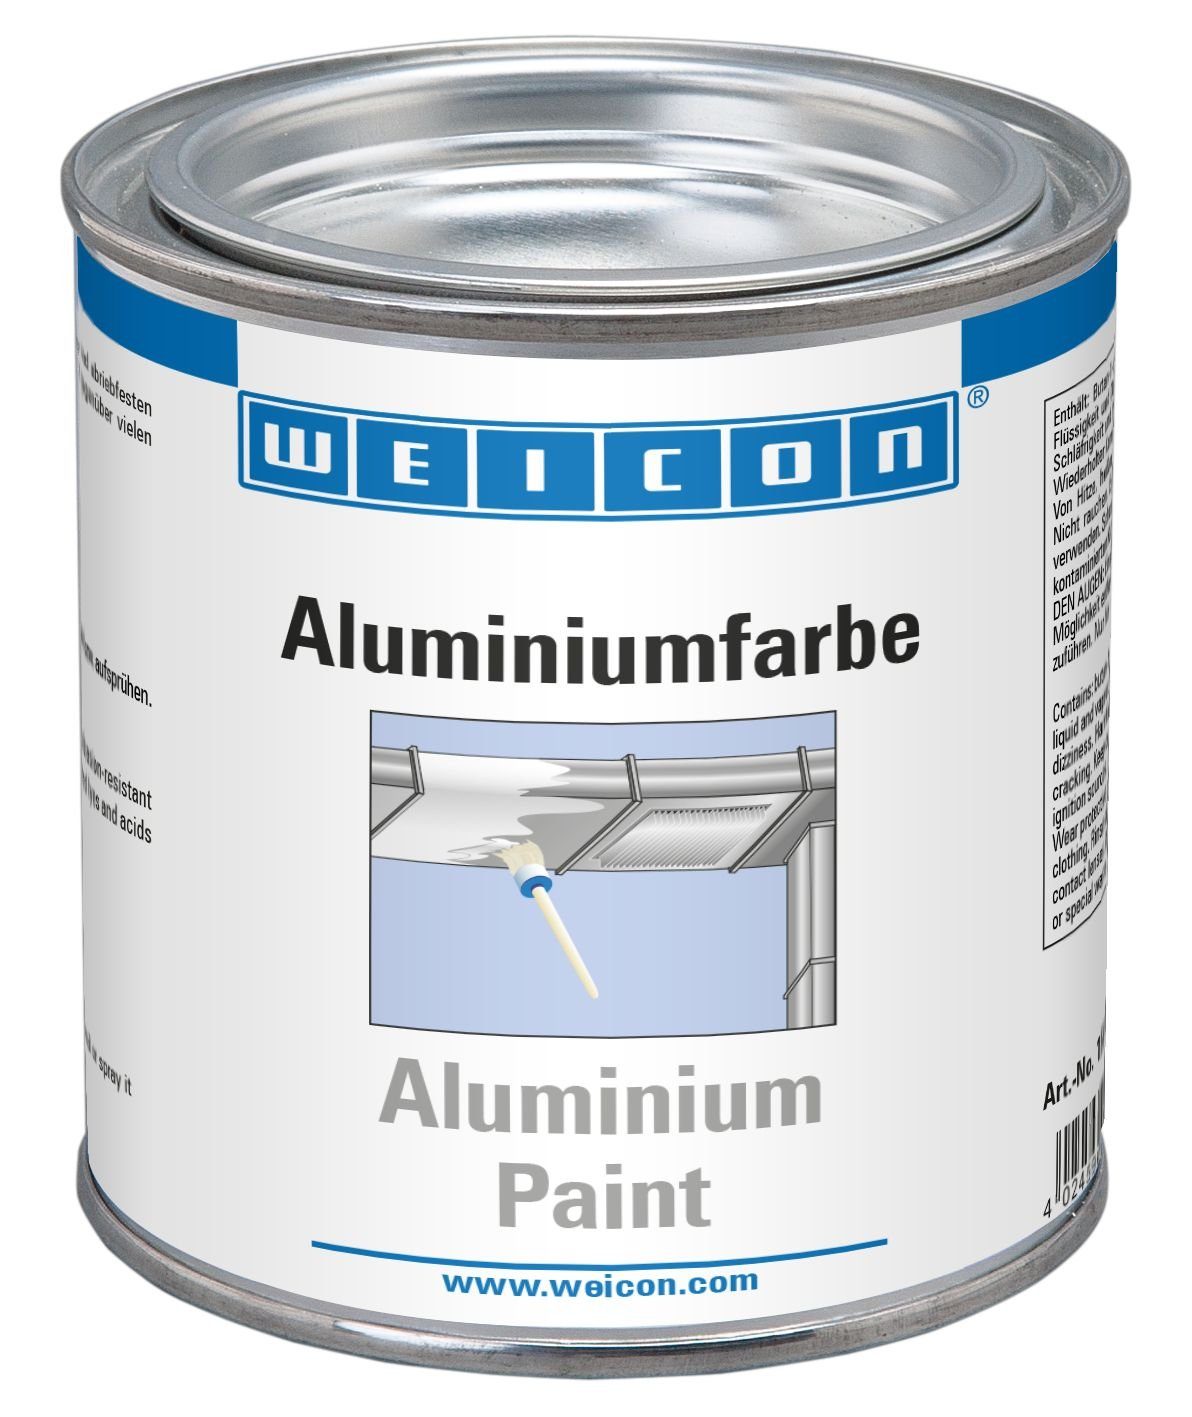 Metallglanzfarbe aus Korrosionsschutz Aluminiumfarbe, WEICON Aluminiumpigmentbeschichtung